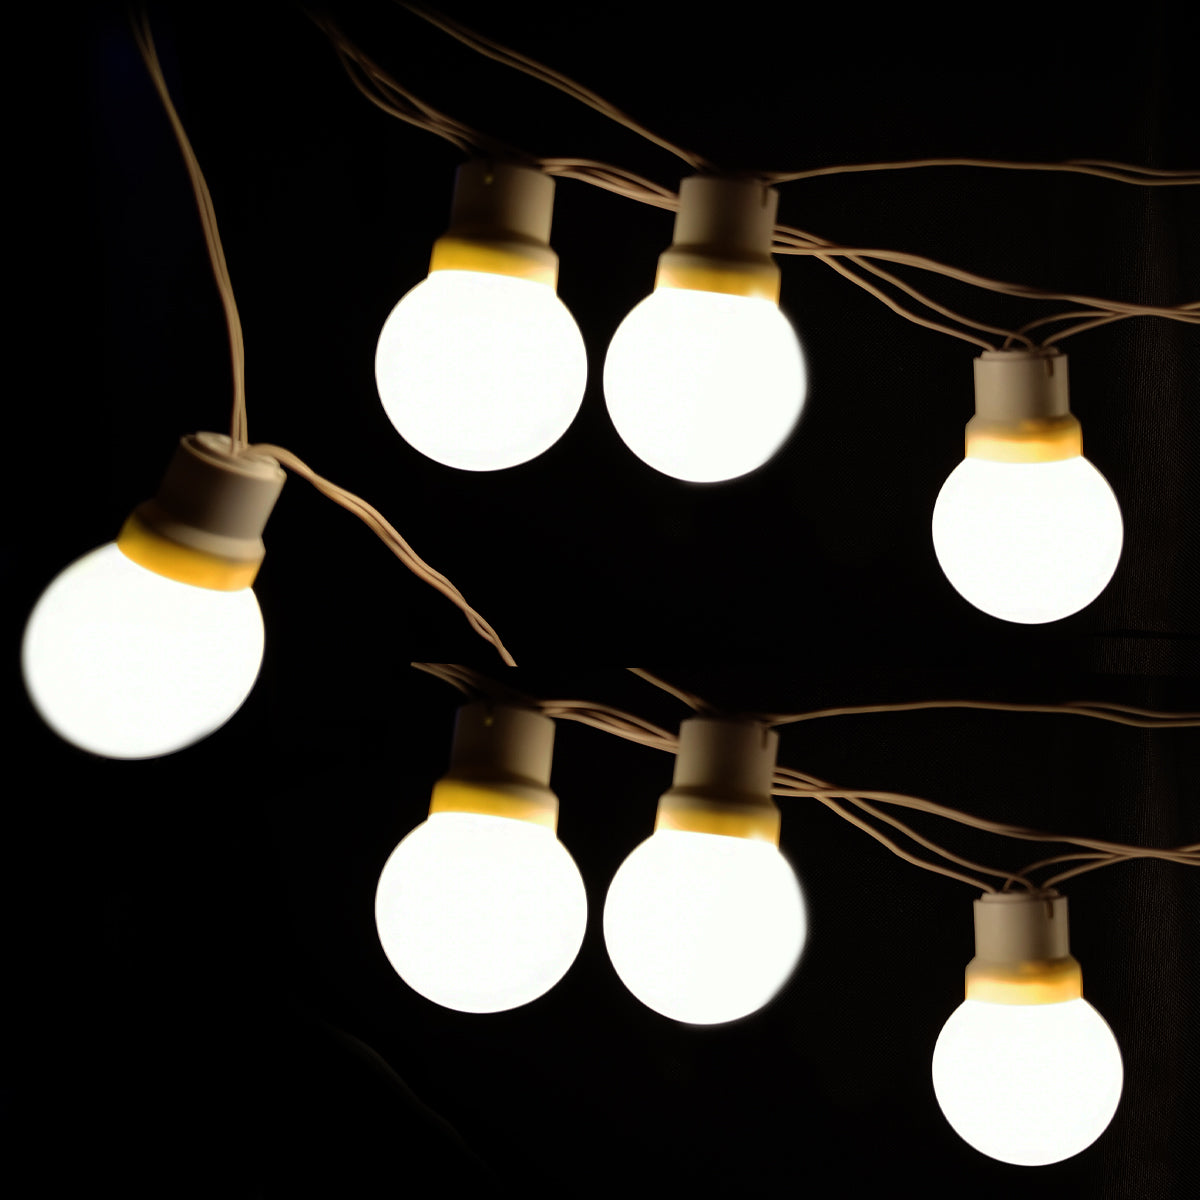 20 LED Shatterproof Bulb String Light, Waterproof Indoor Outdoor Lights for Home Decoration(22 Feet)